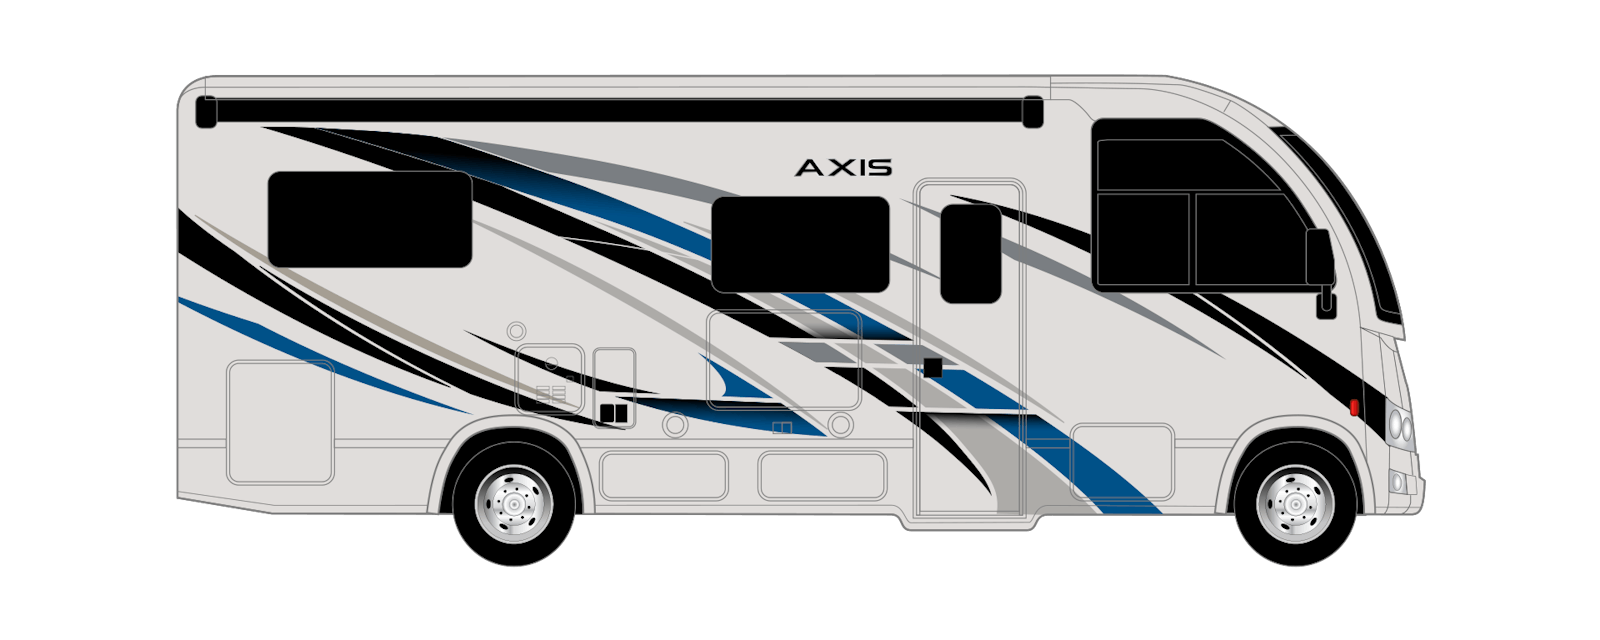 Thor Axis Class A Motorhome - Thor Motor Coach